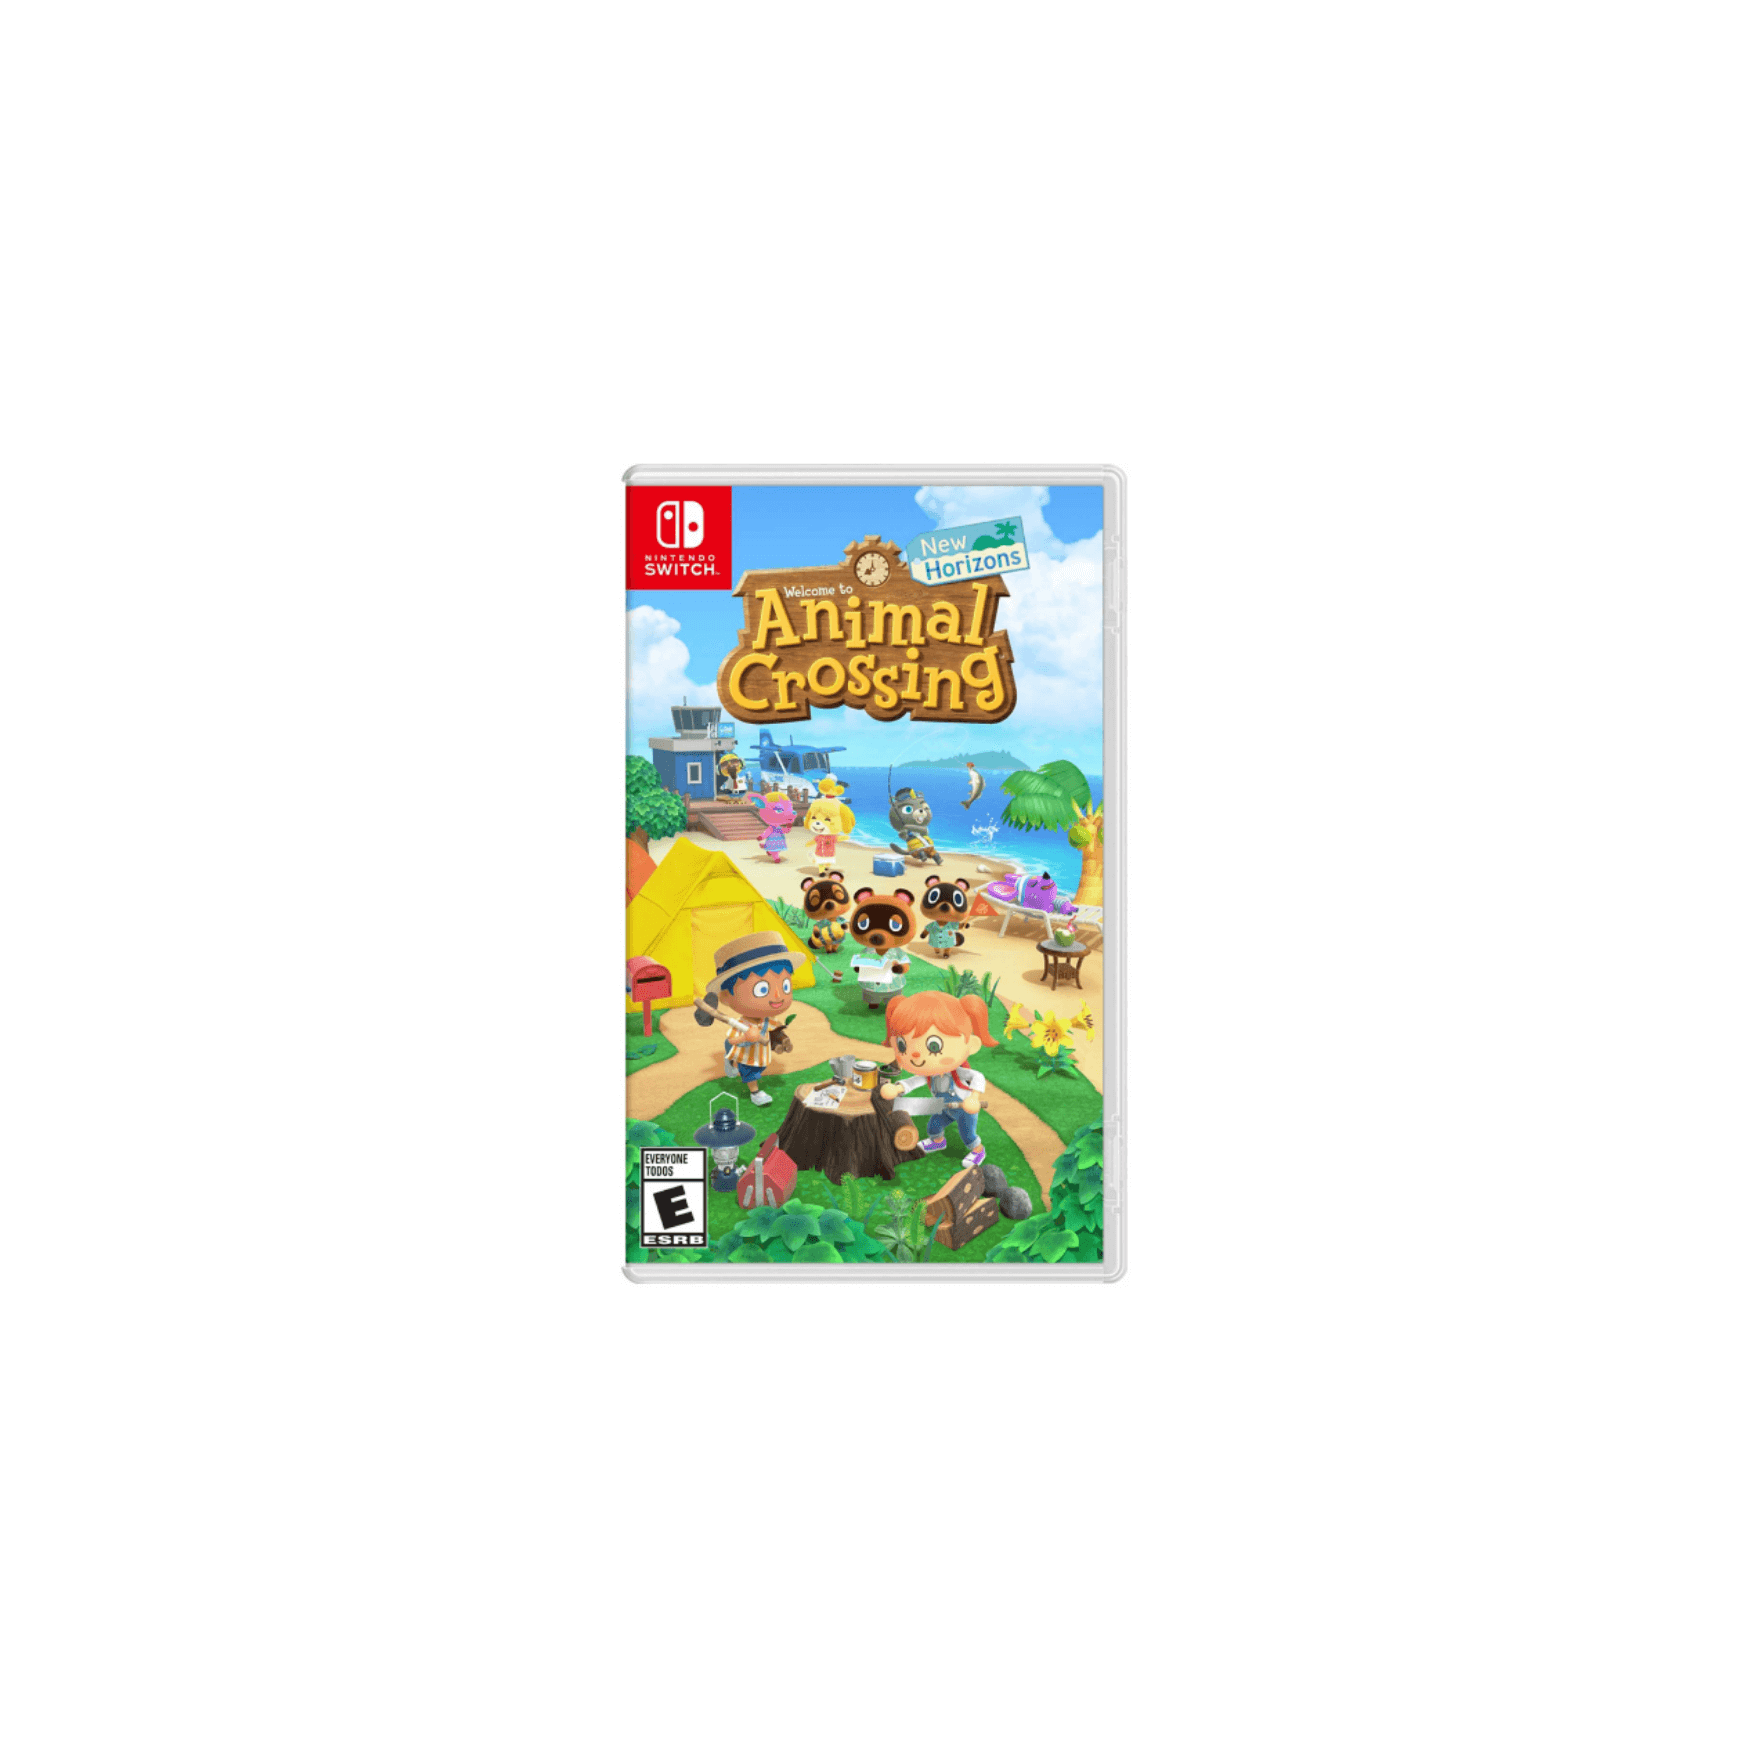 Nintendo Switch Game Animal Crossing: New Horizons - for Nintendo Switch